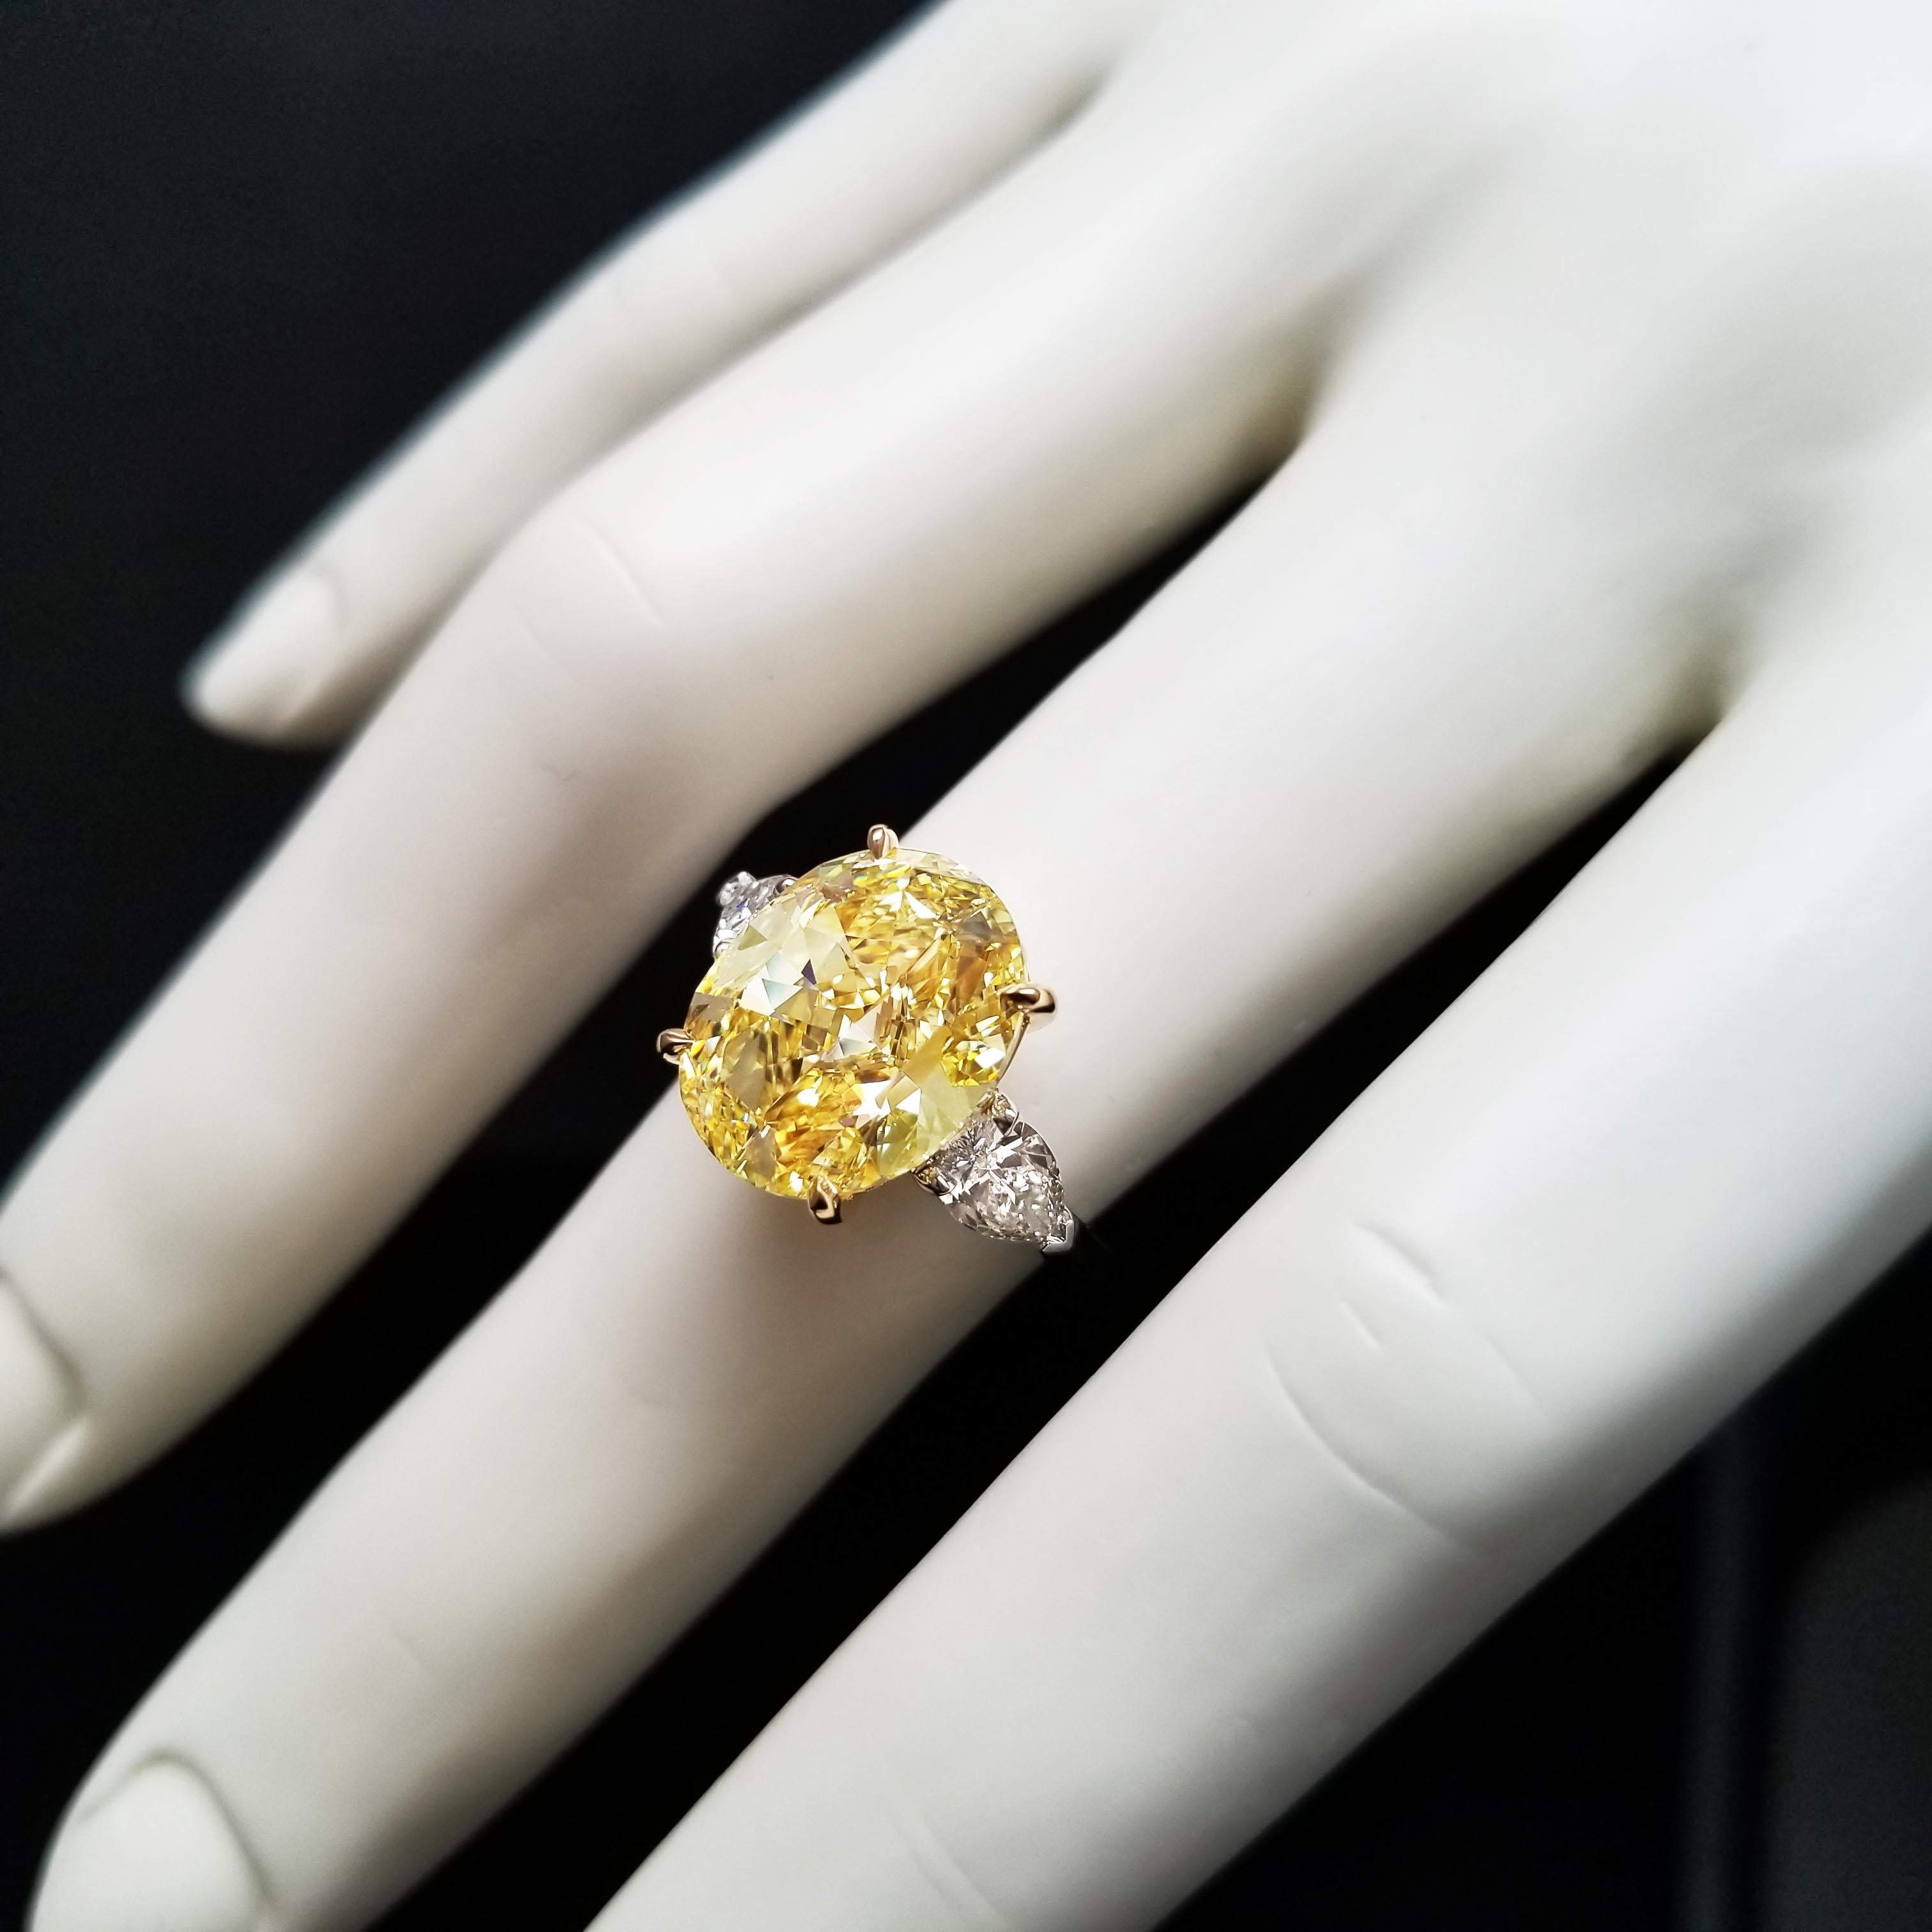 8 carat yellow diamond ring